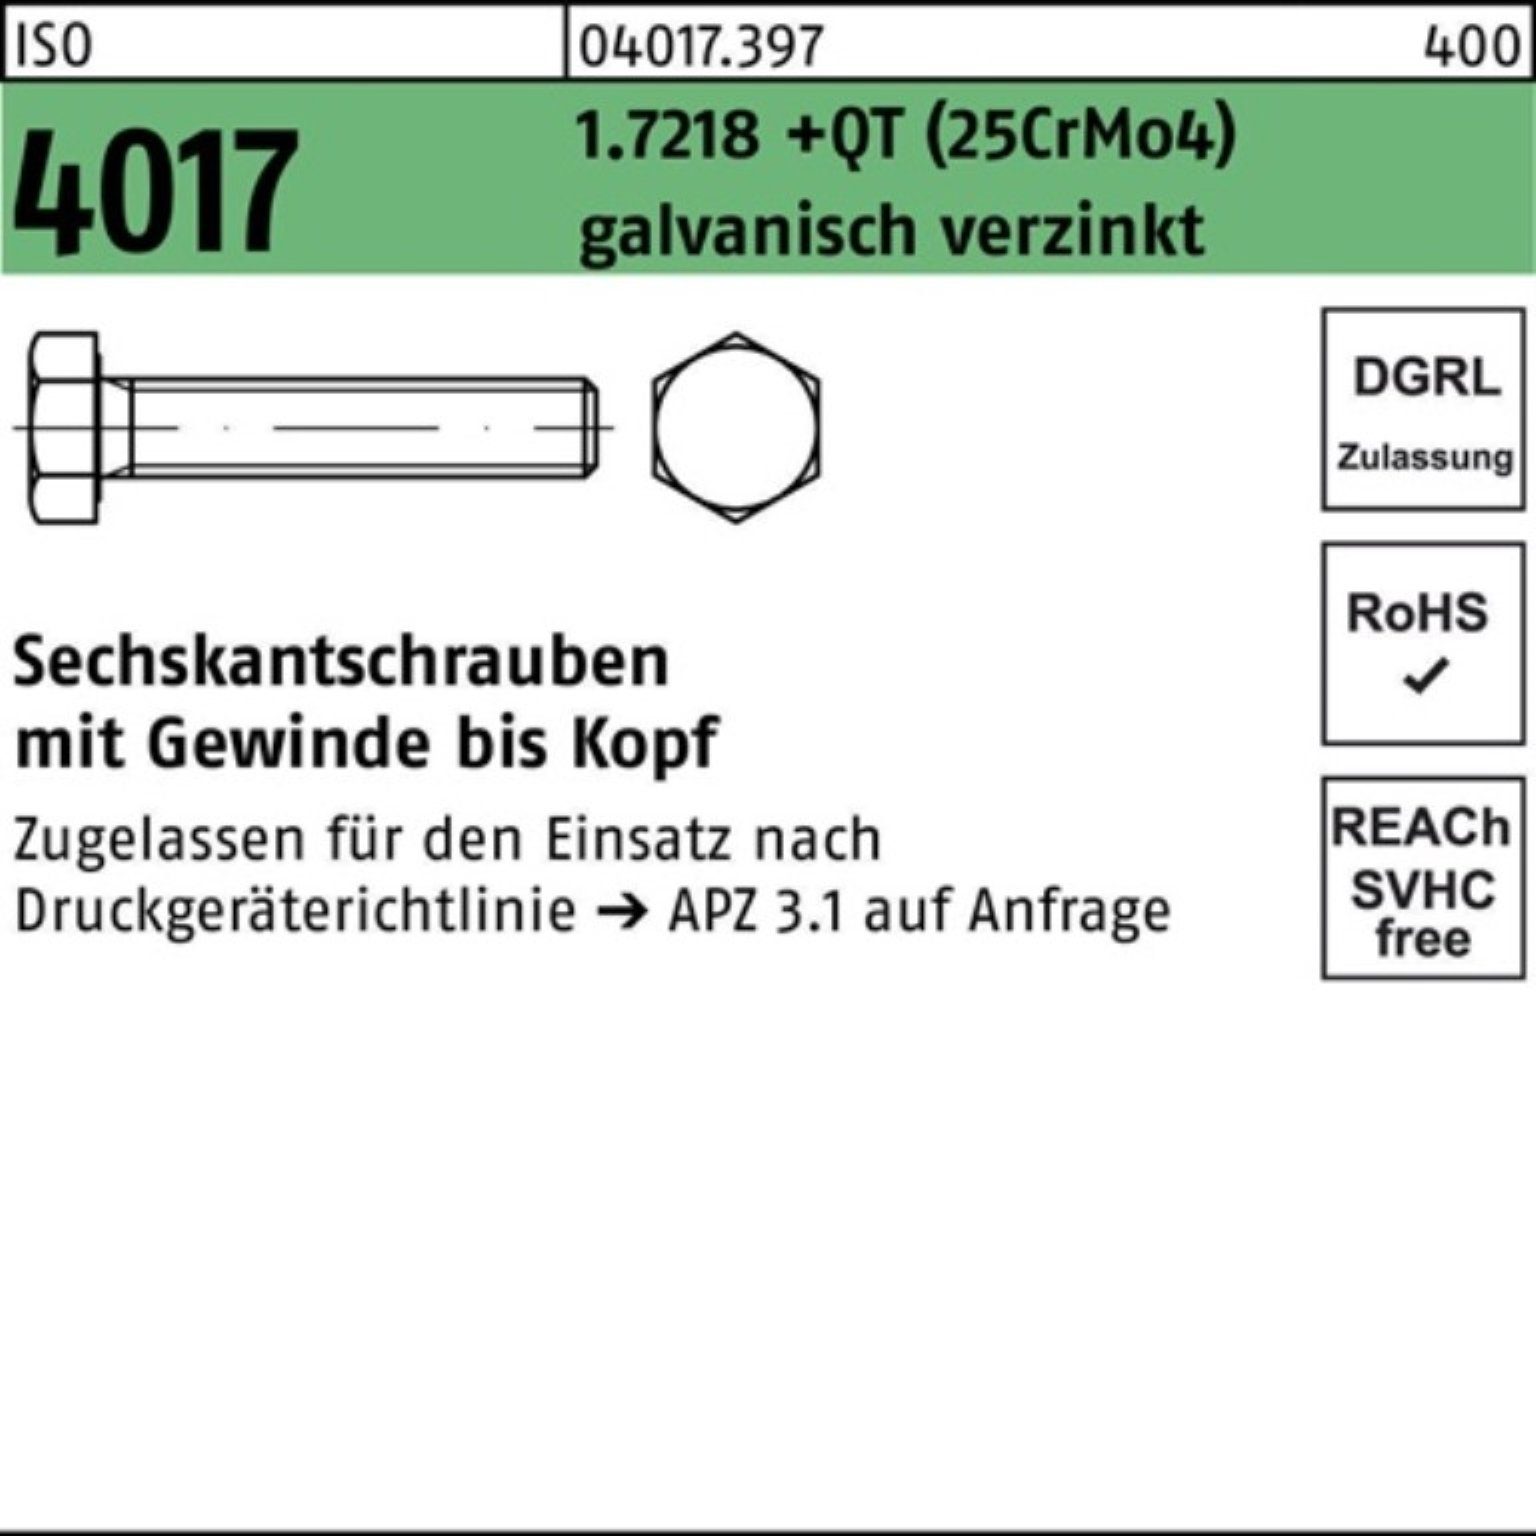 1.7218 +QT Sechskantschraube (25CrMo4) Bufab VG Pack M20x180 4017 ISO Sechskantschraube 100er